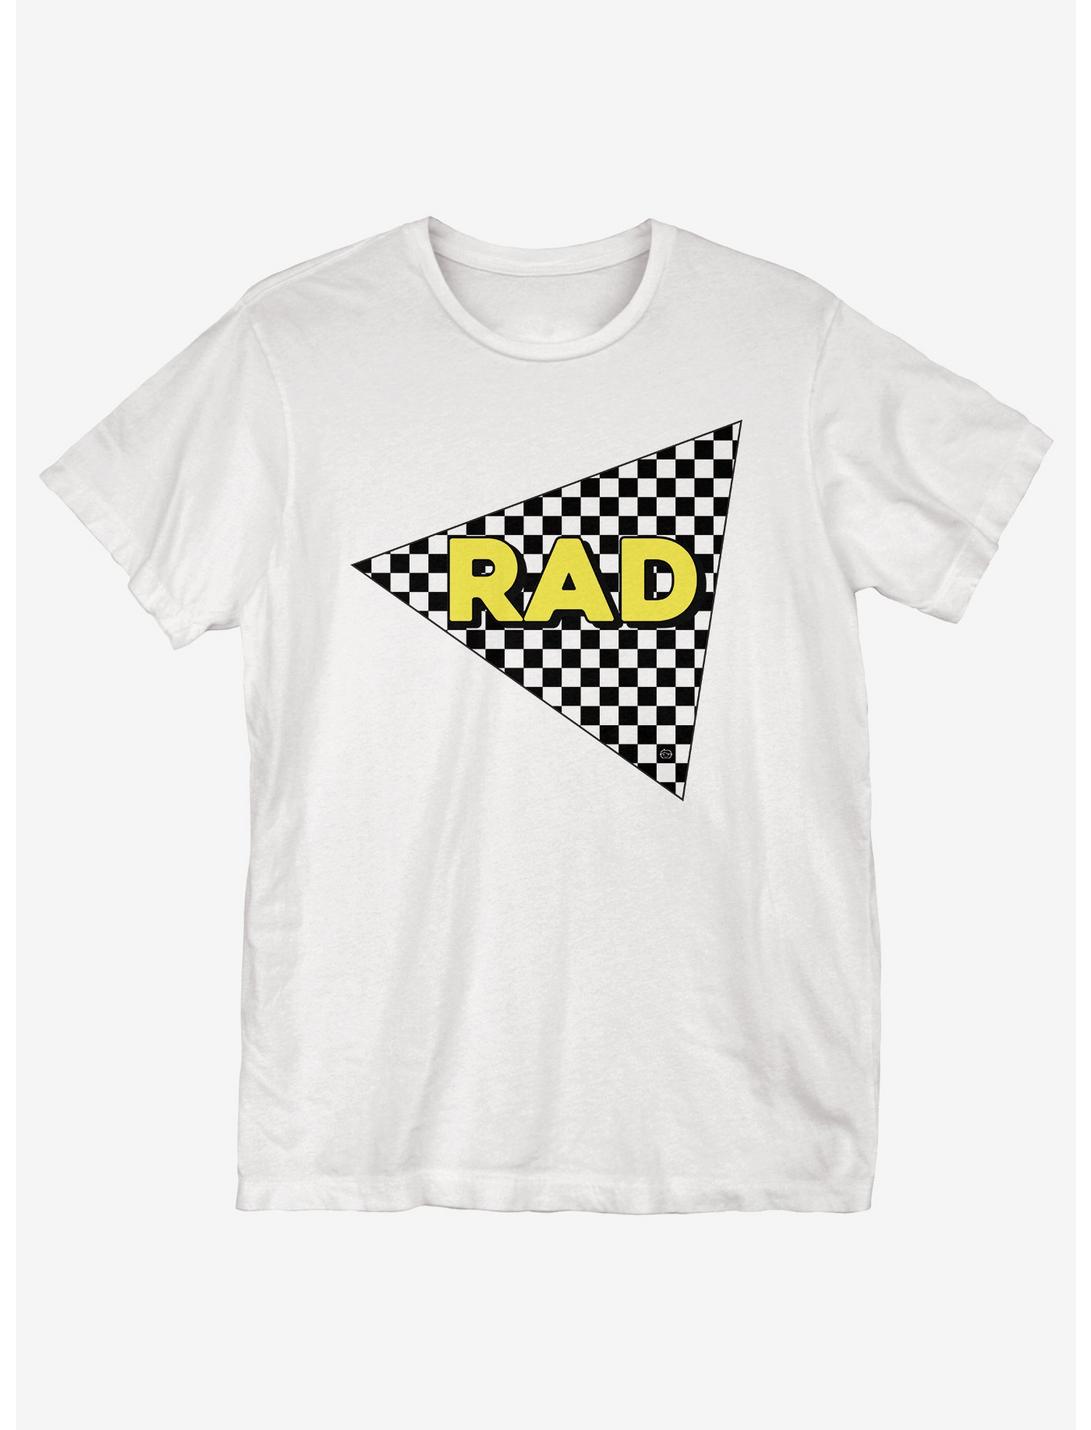 Rad T-Shirt, WHITE, hi-res